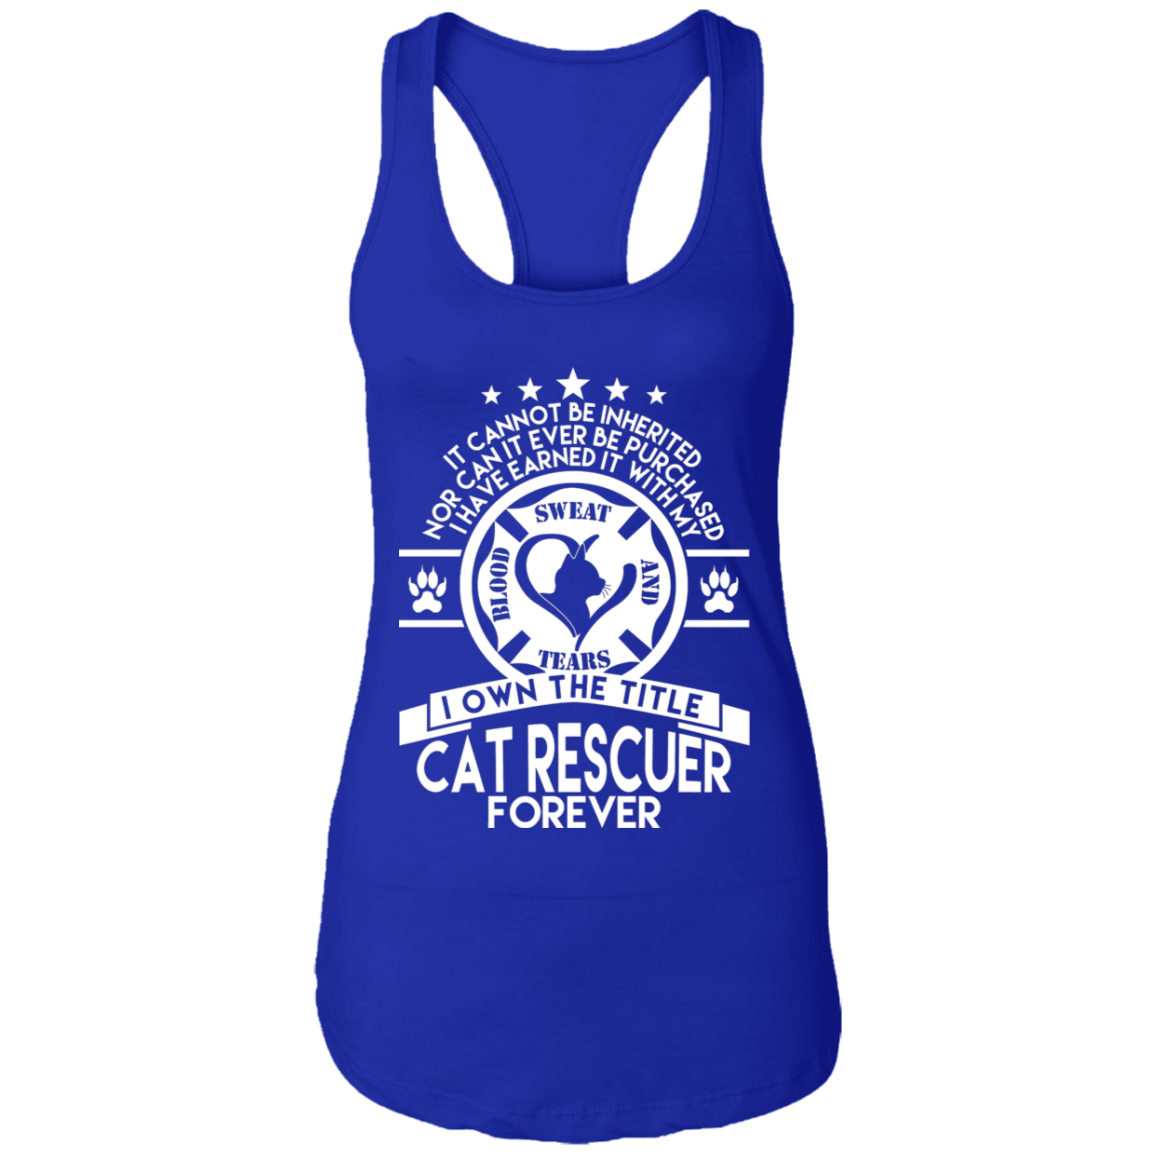 Cat Rescuer Forever - Ladies Racer Back Tank.